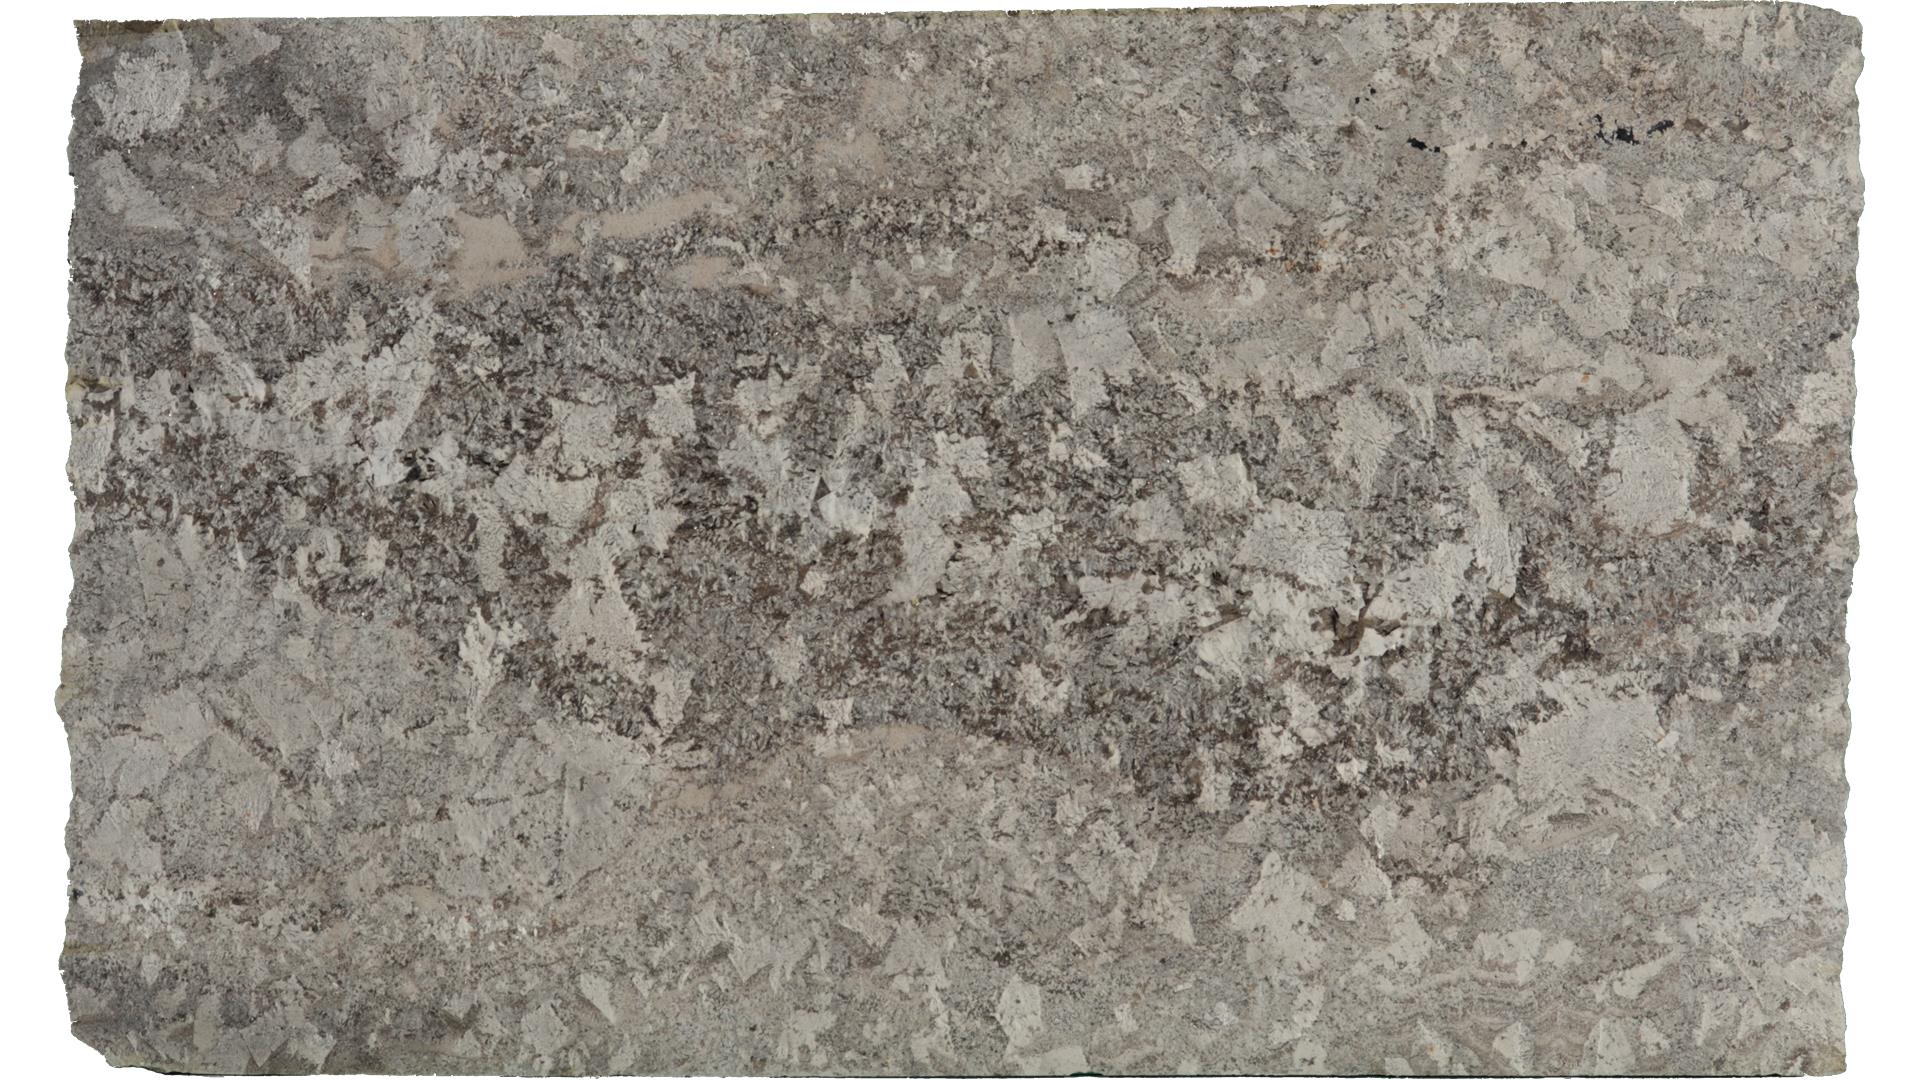 Ganashe Granite Slabs